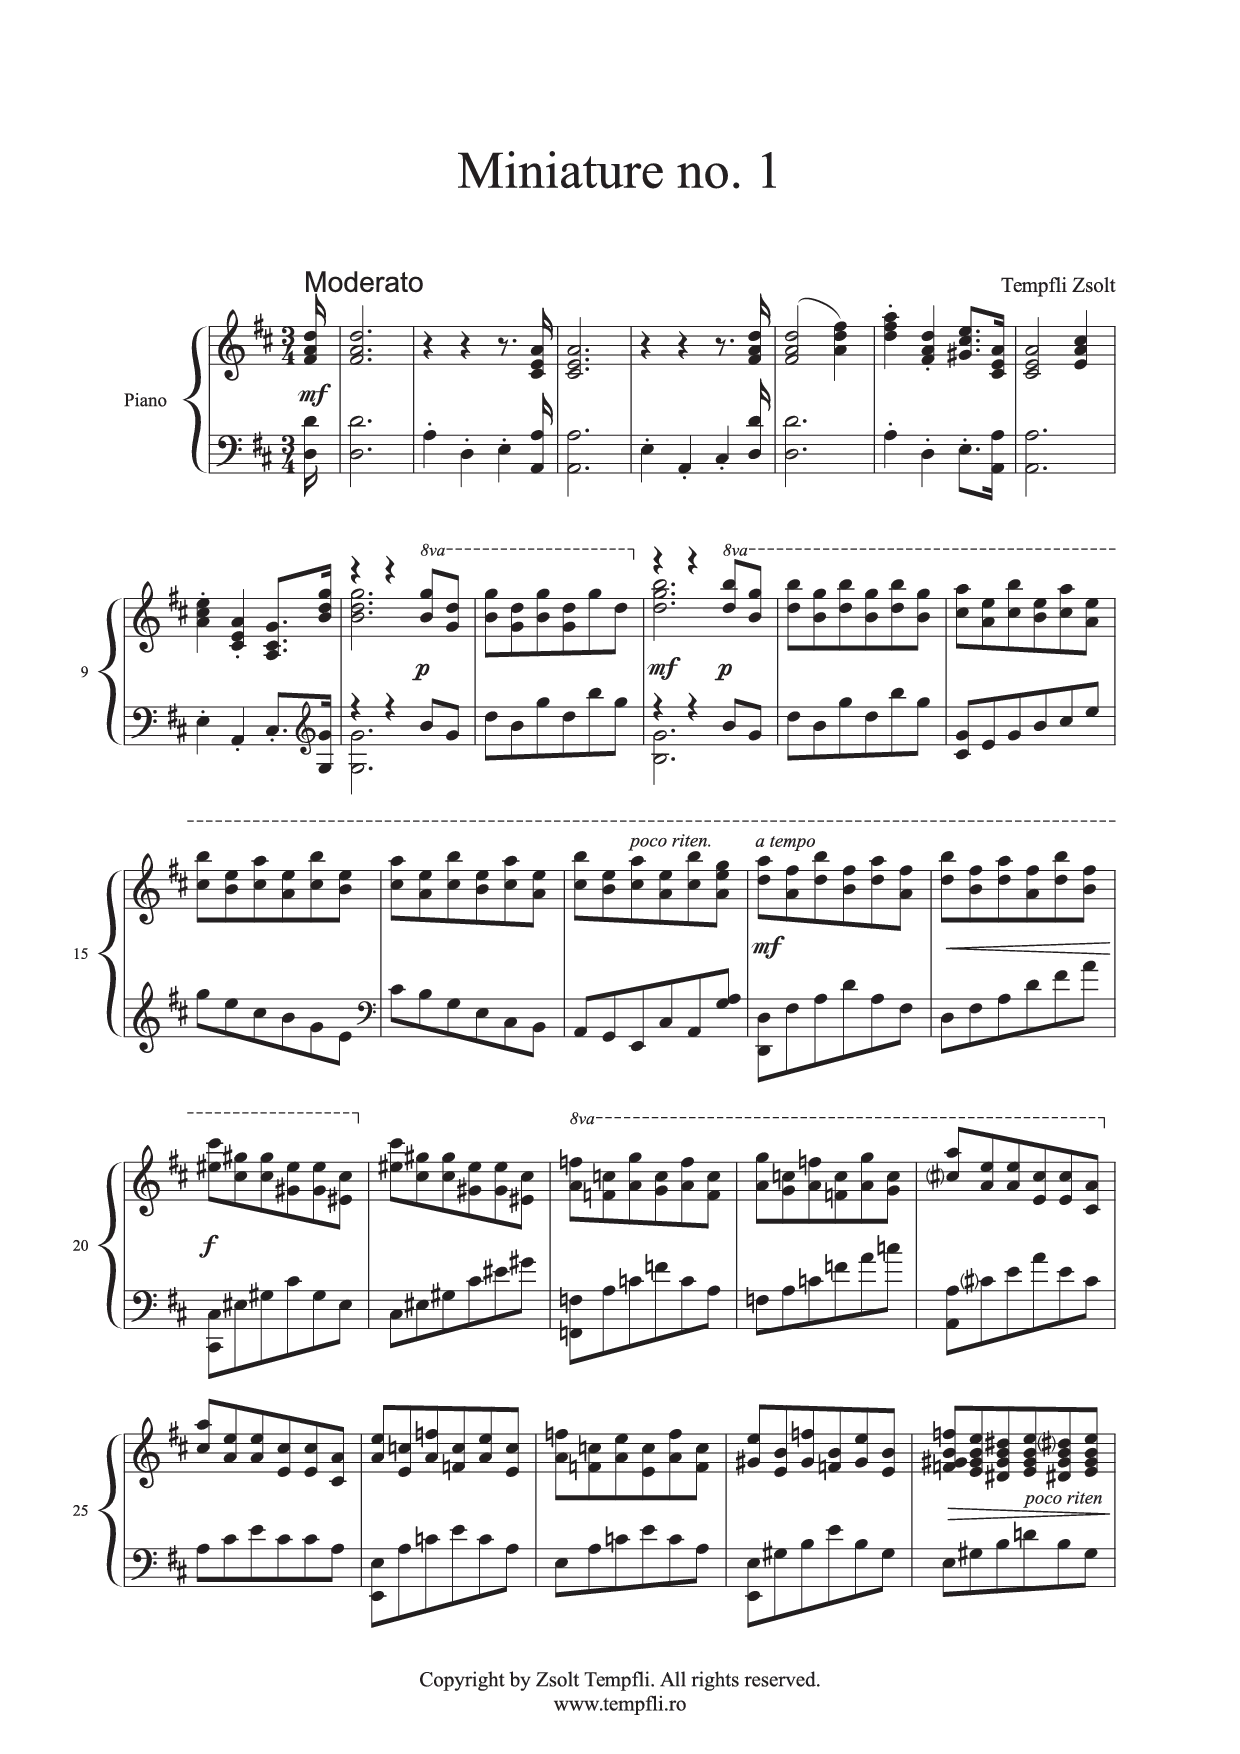 Zsolt Tempfli - Miniature no. 1 for piano